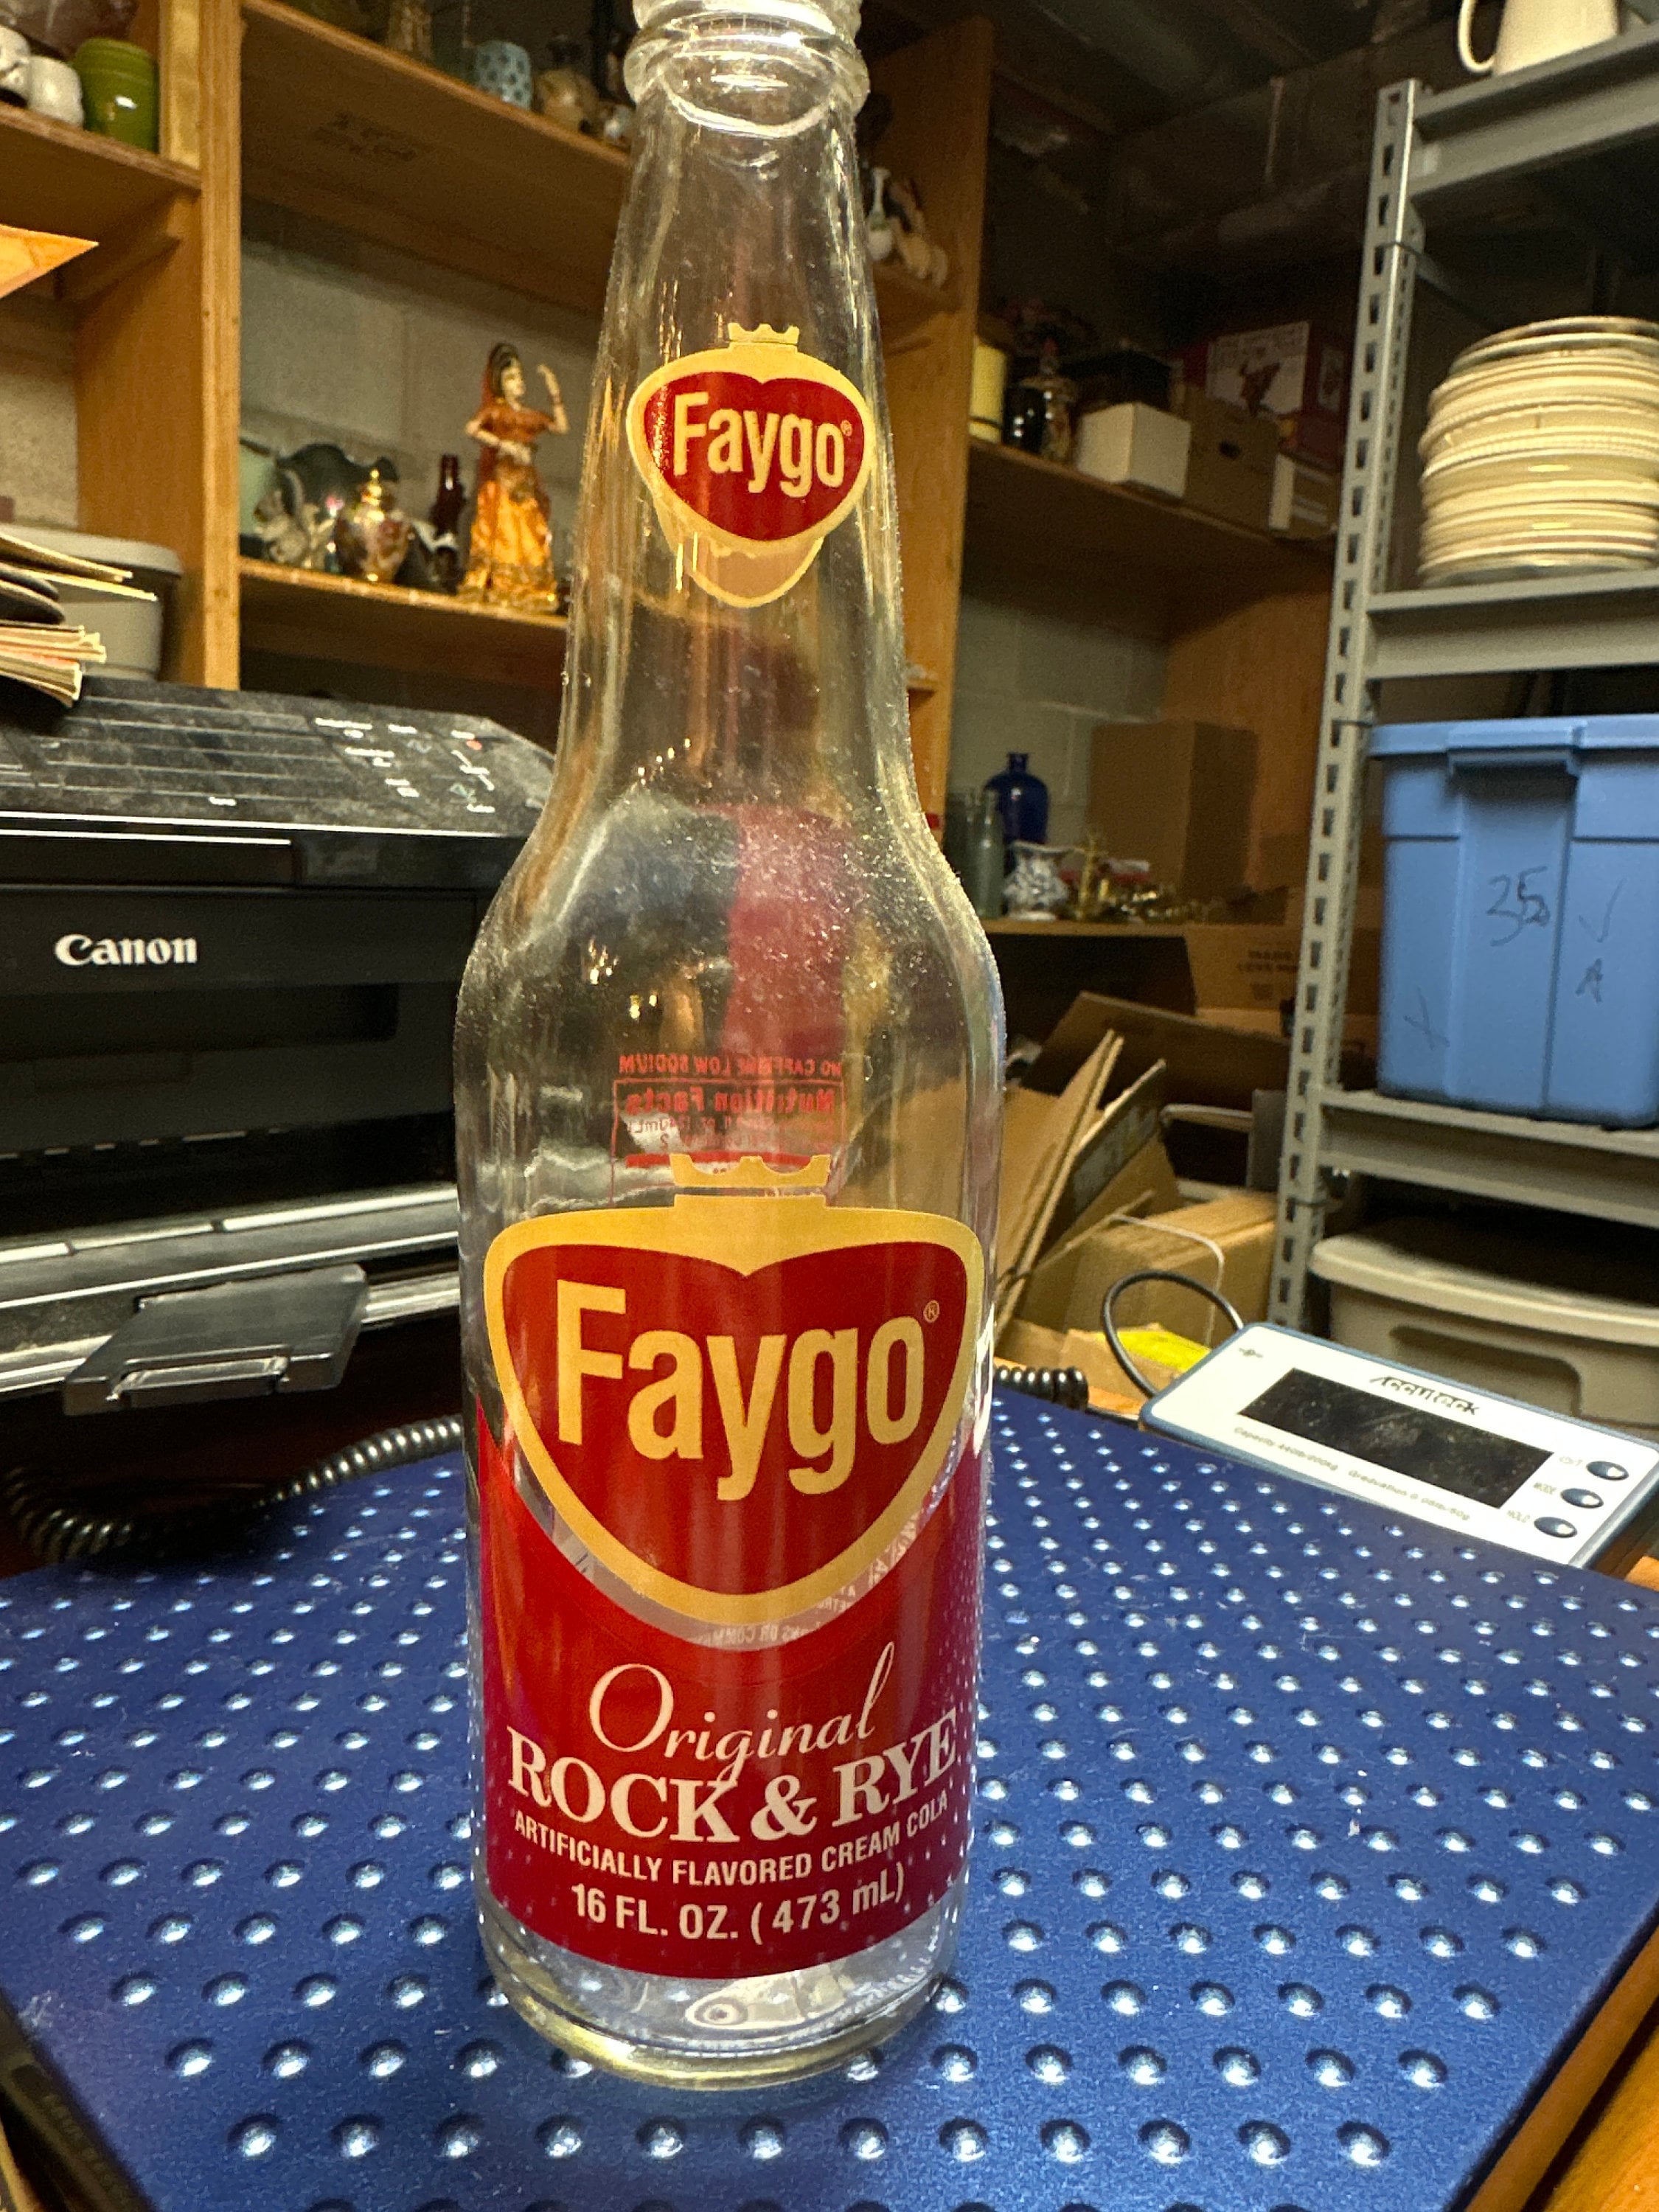 Faygo Rock and Ray Bottle photo image